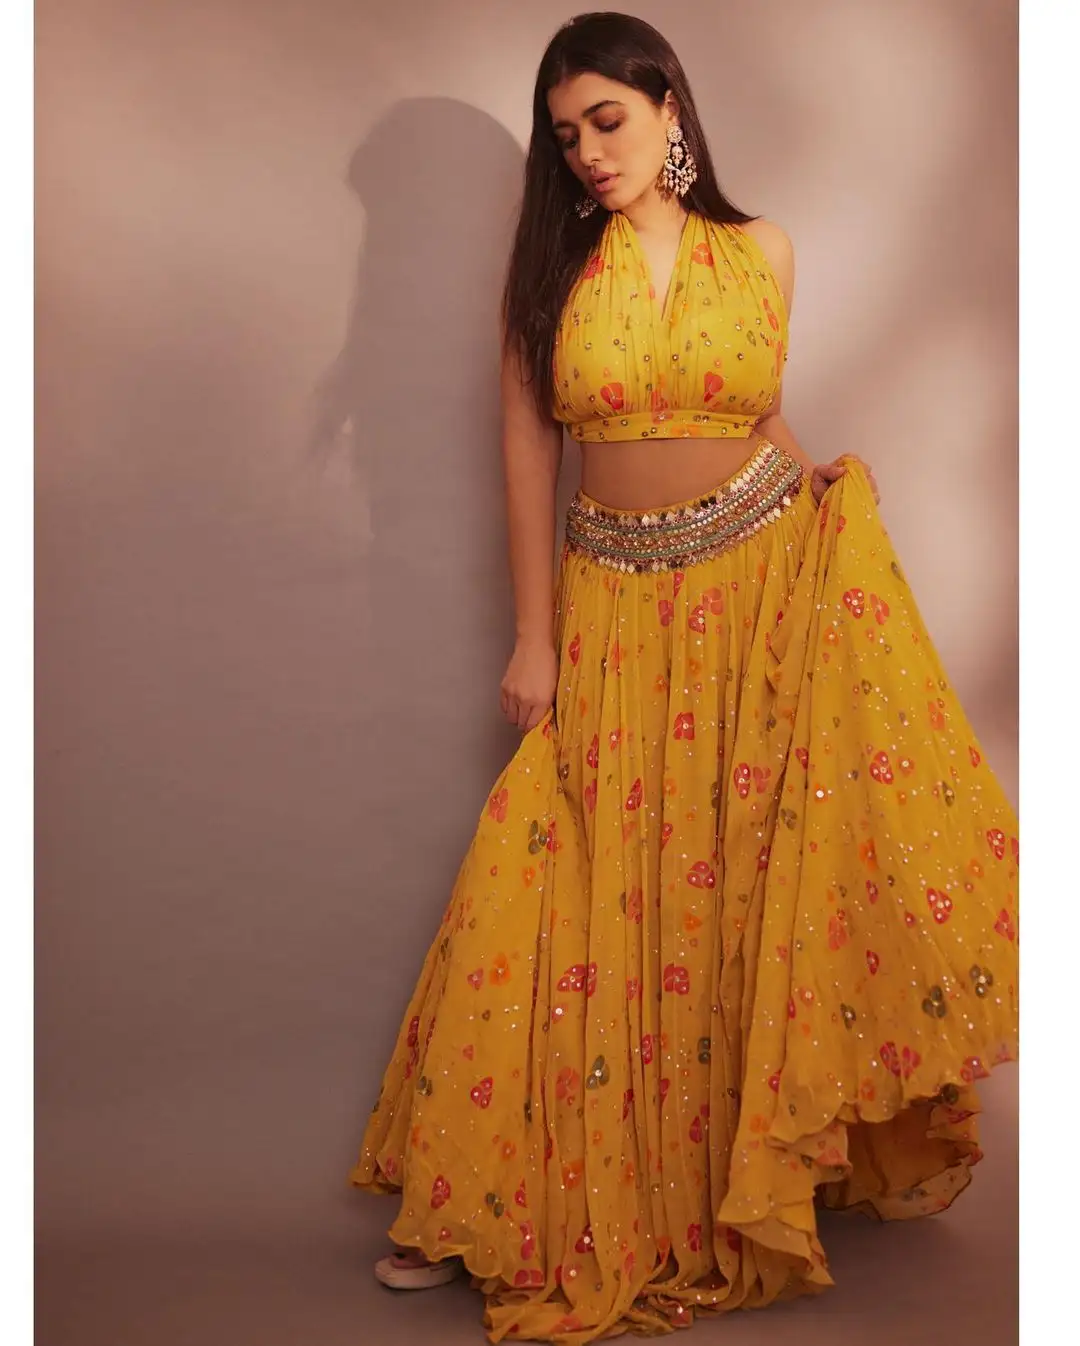 Kethika Sharma Photoshoot in variety Traditional Dress